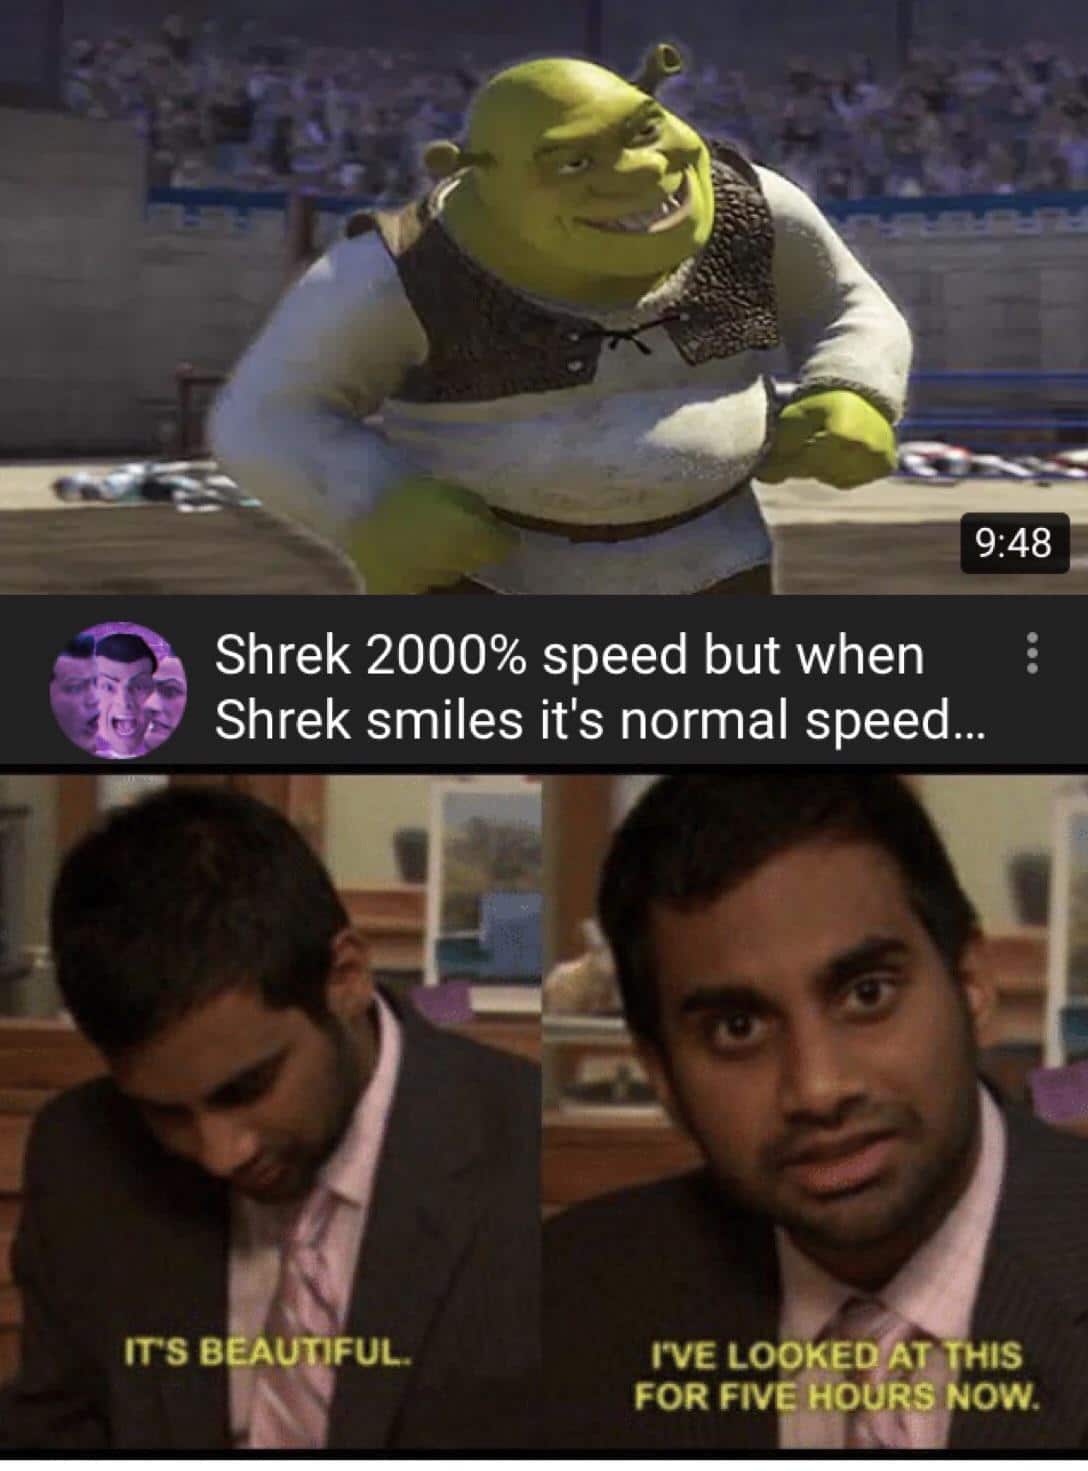 Dank Meme dank-memes cute text: 9:48 Shrek 2000% speed but when Shrek smiles it's normal speed... ms BEAU FUL WE LOOKED AT THIS FOR FIV HOdRS NOW. 